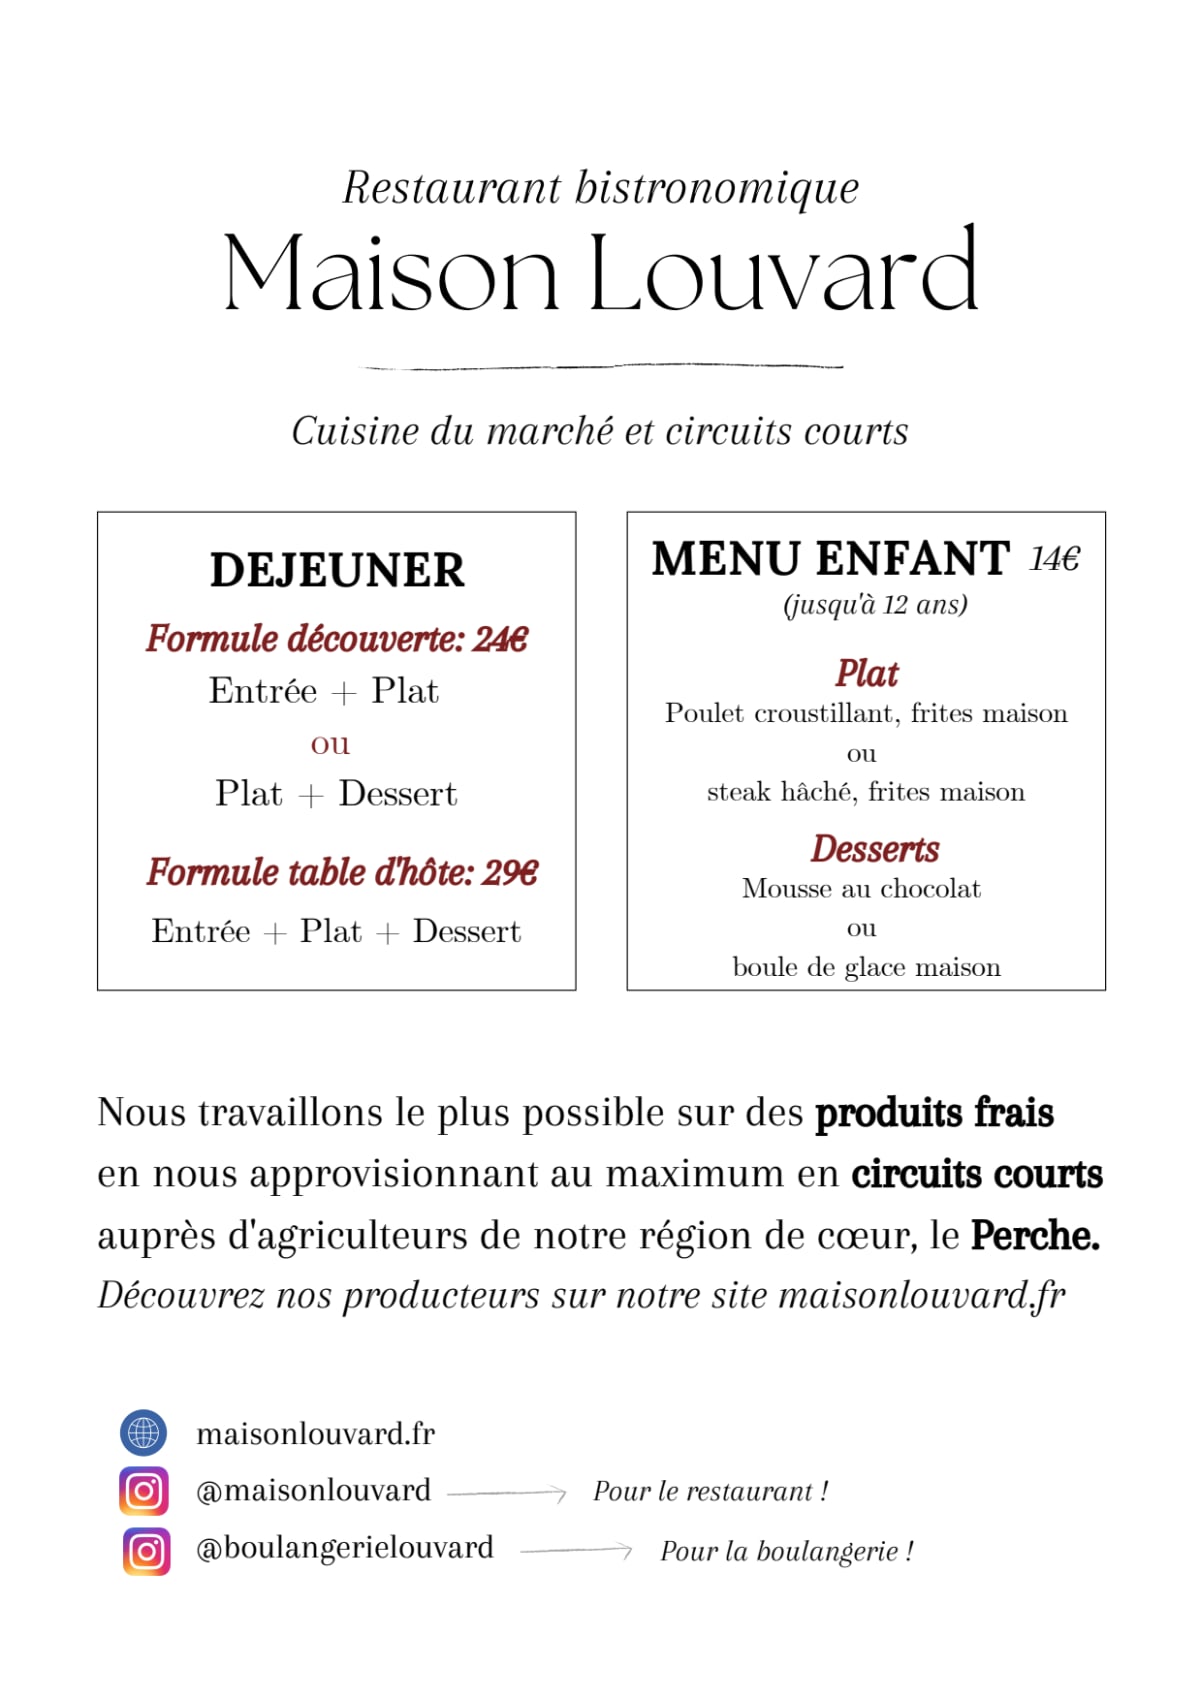 Maison Louvard menu